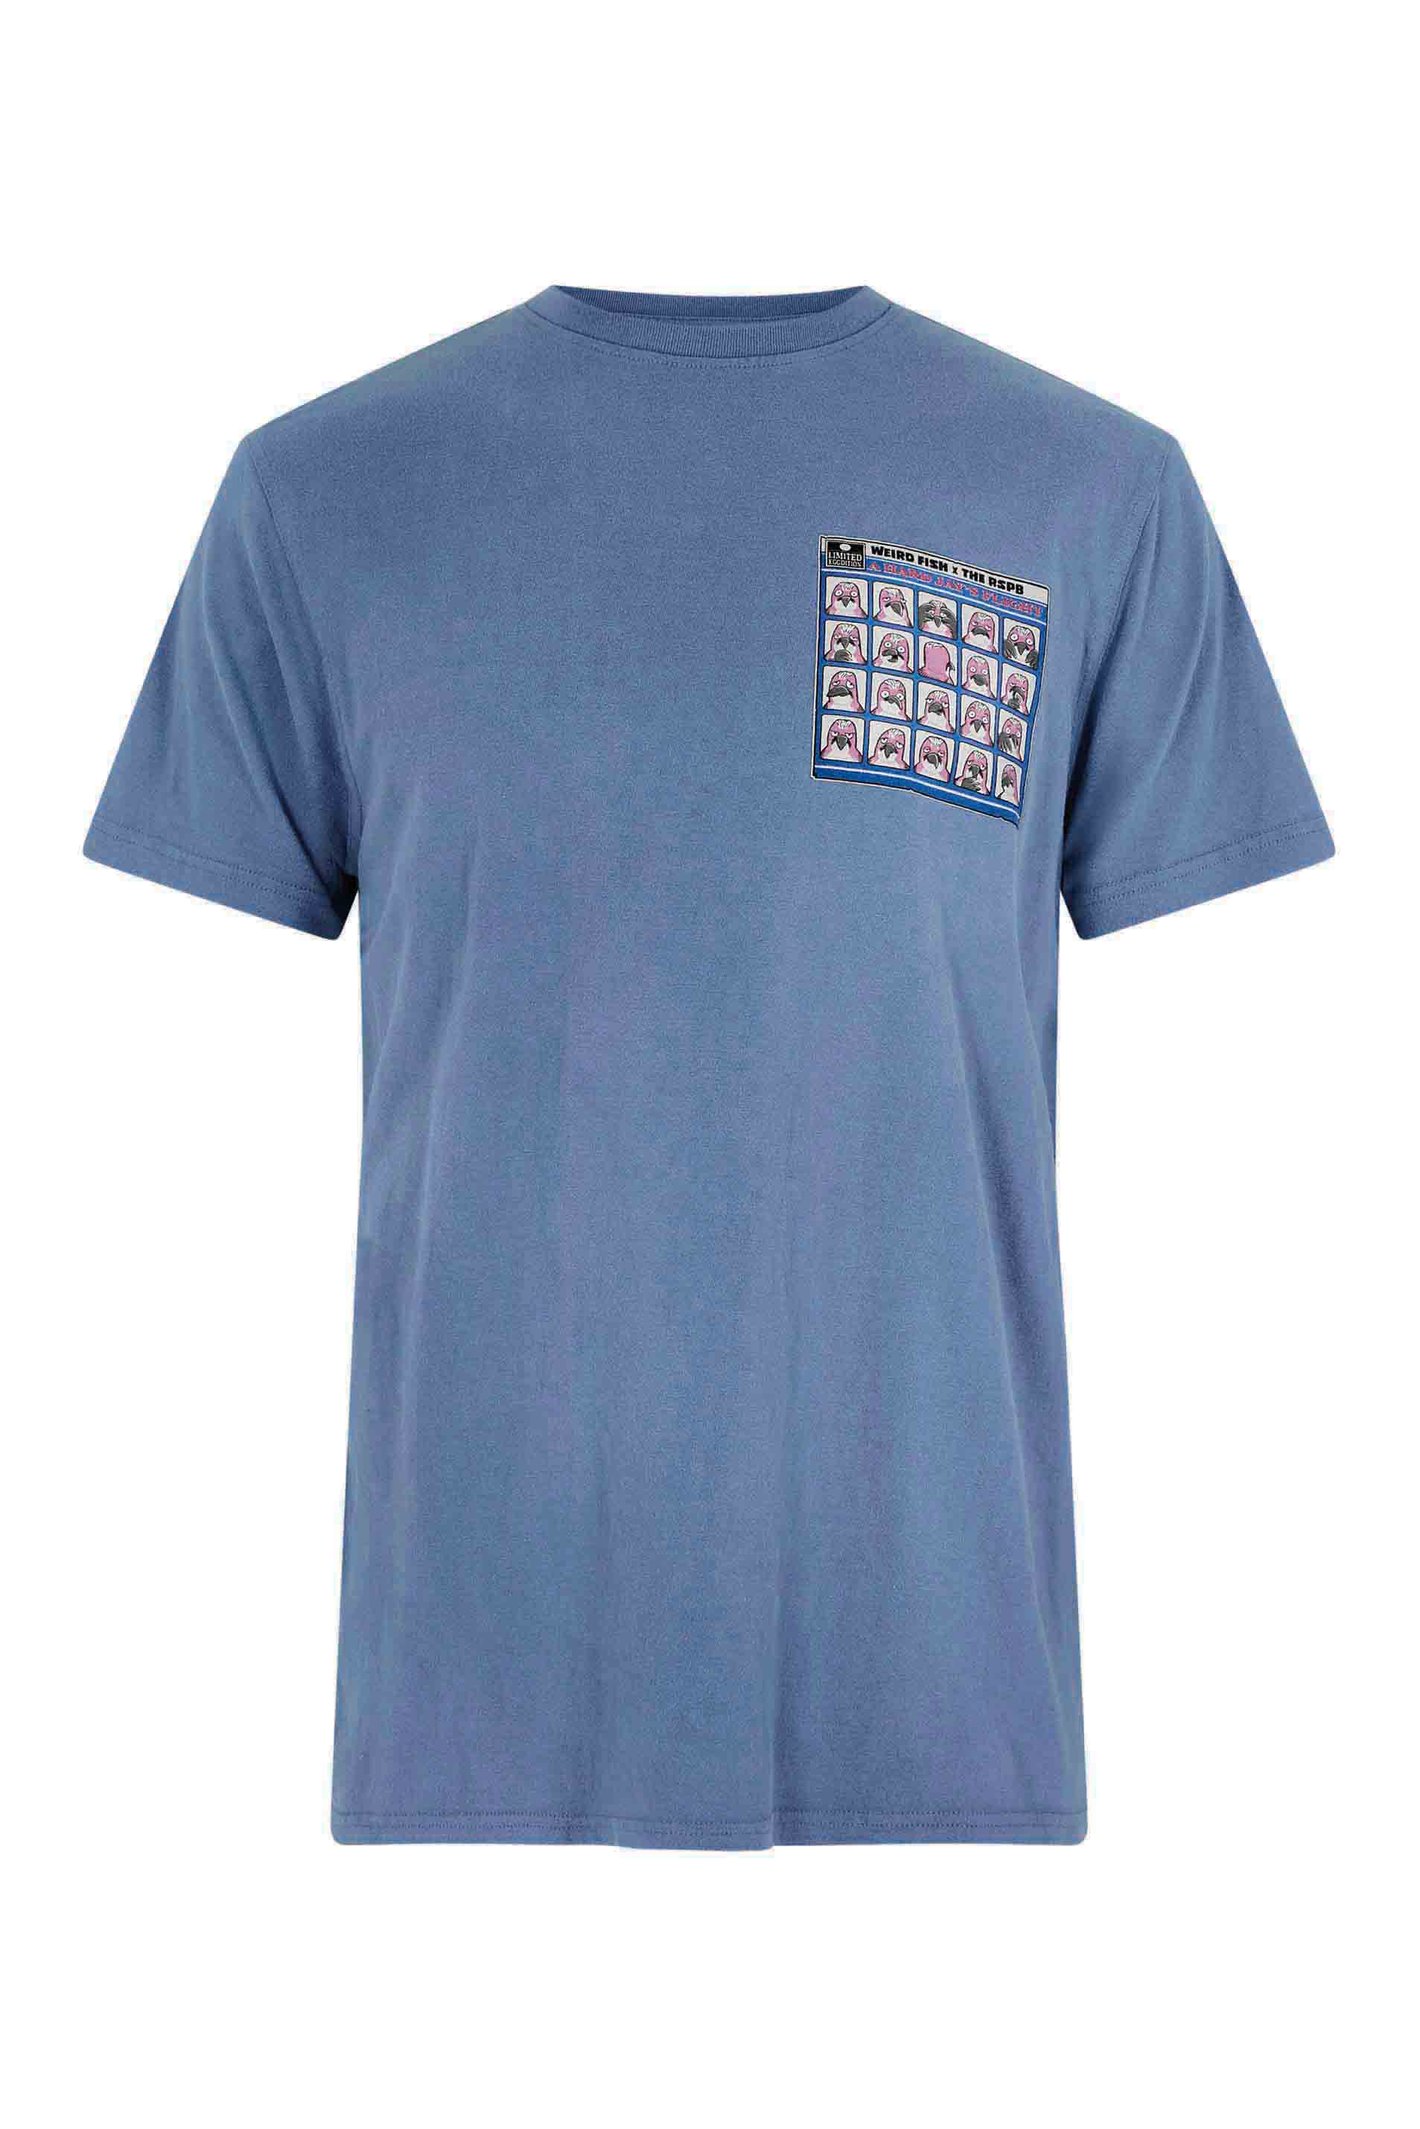 Weird Fish Jay's Flight RSPB Artist T-Shirt Collaboration Mid Blue Size L